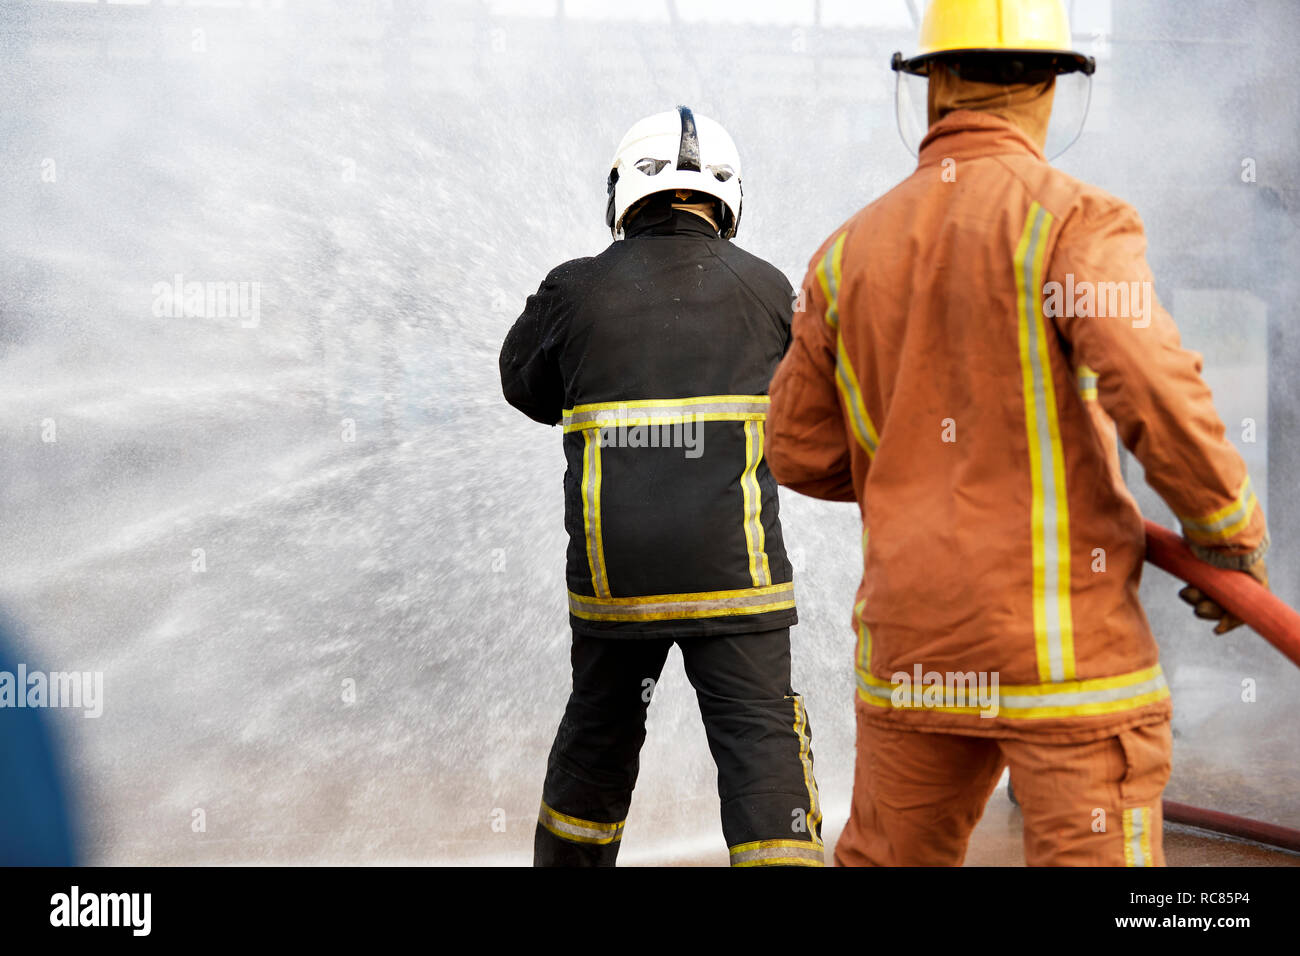 Firemen training, firemen spraying water at training facility, rear view Stock Photo